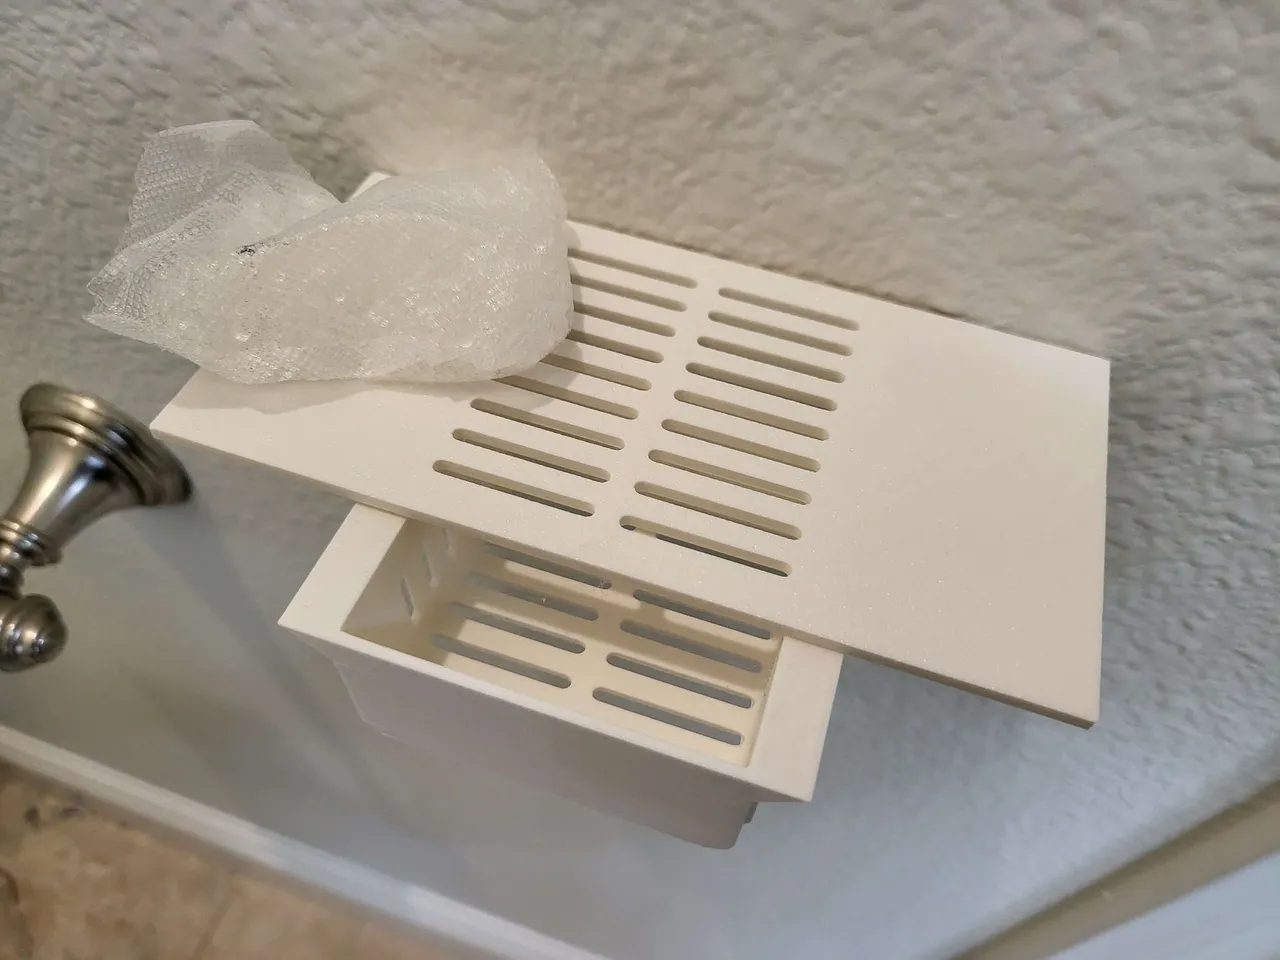 Bathroom Shelves using non-destructive 3M Command Strips by Chipp